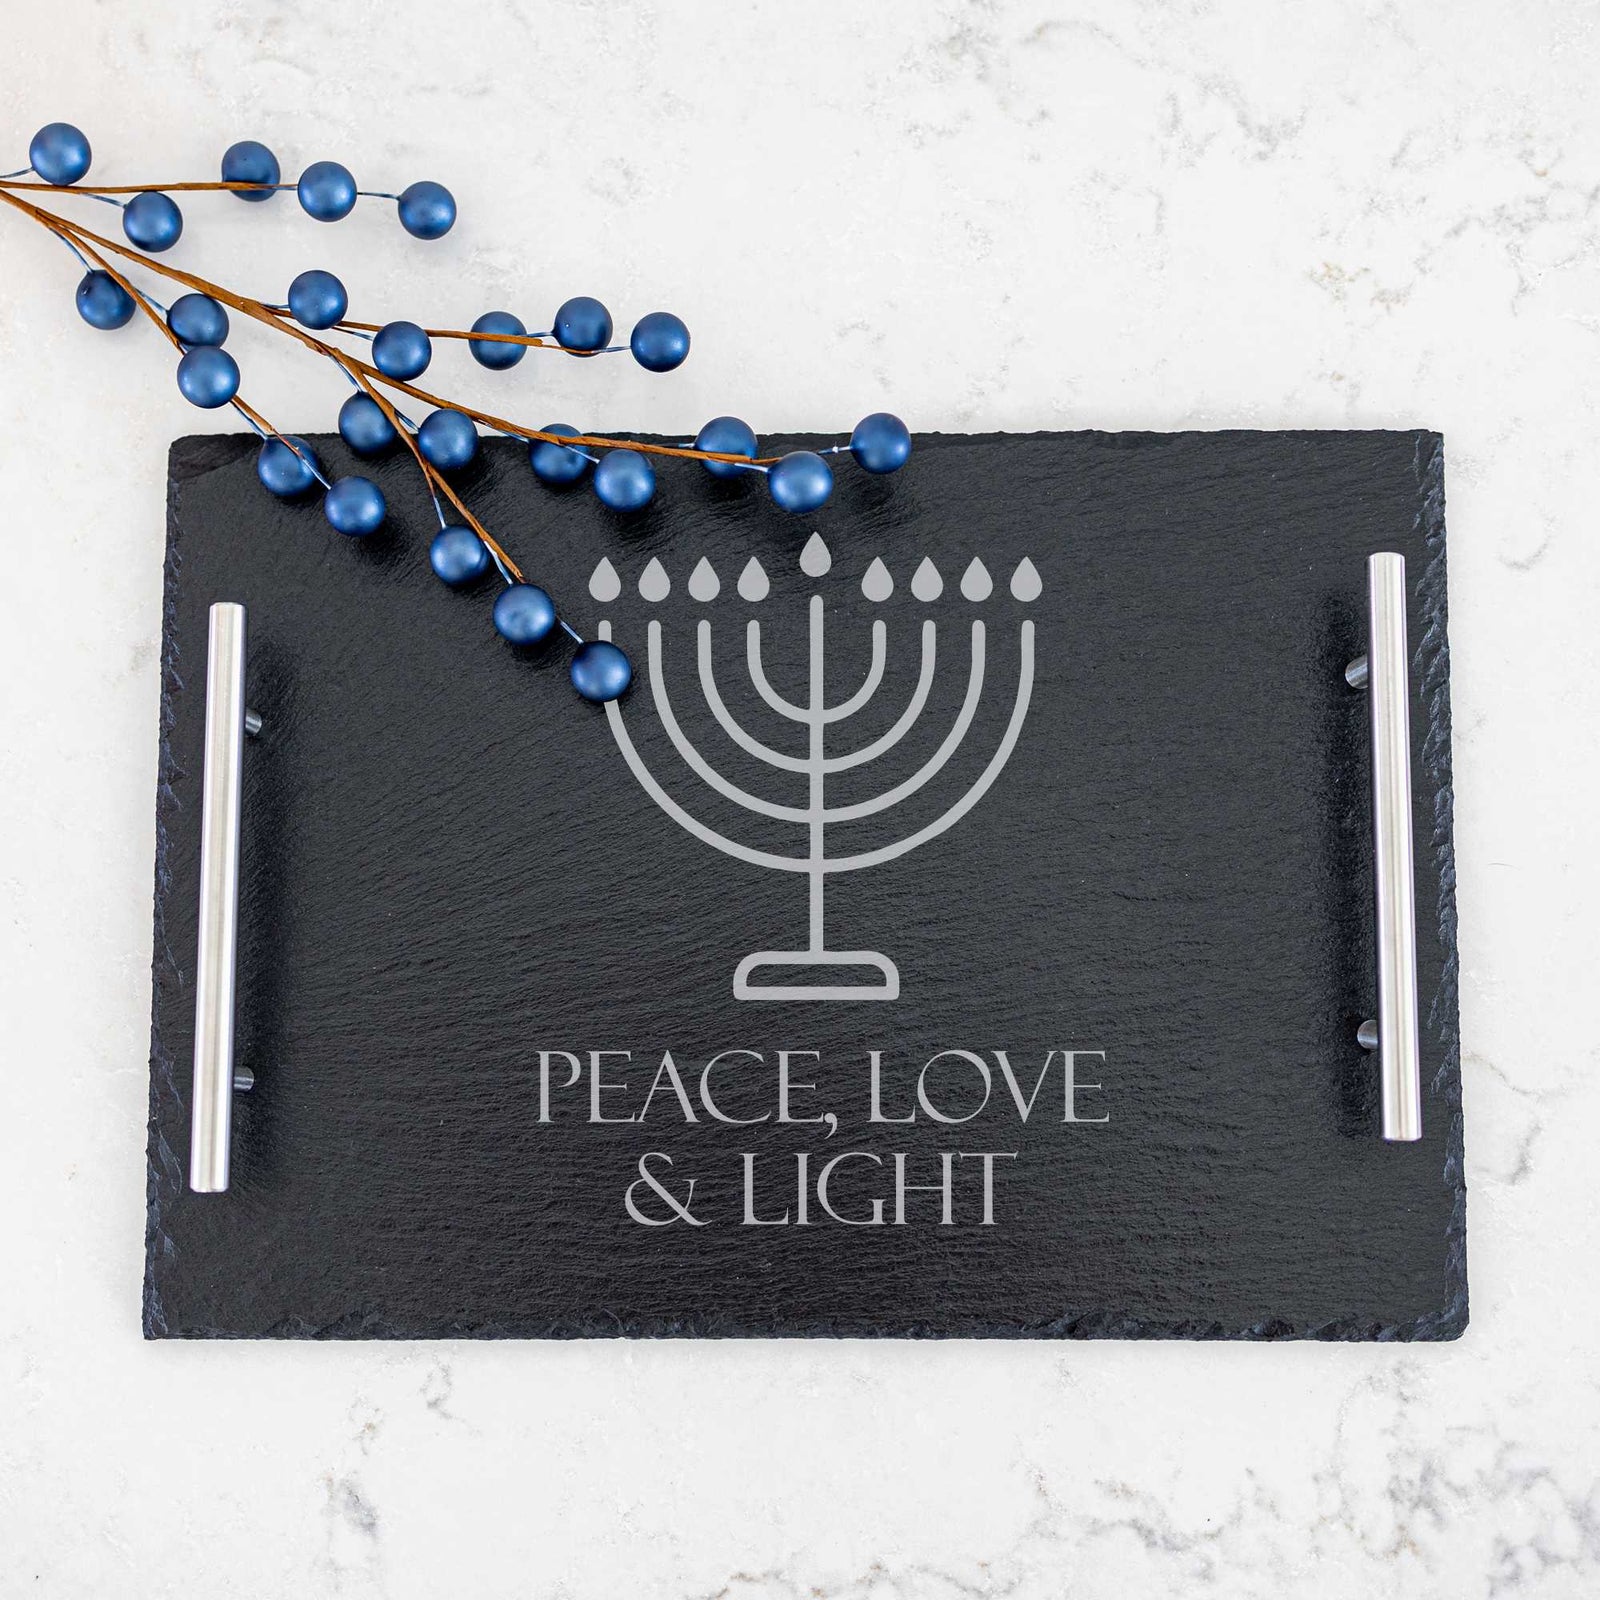 Peace, Love, & Light - Slate Serving Tray for Hanukkah